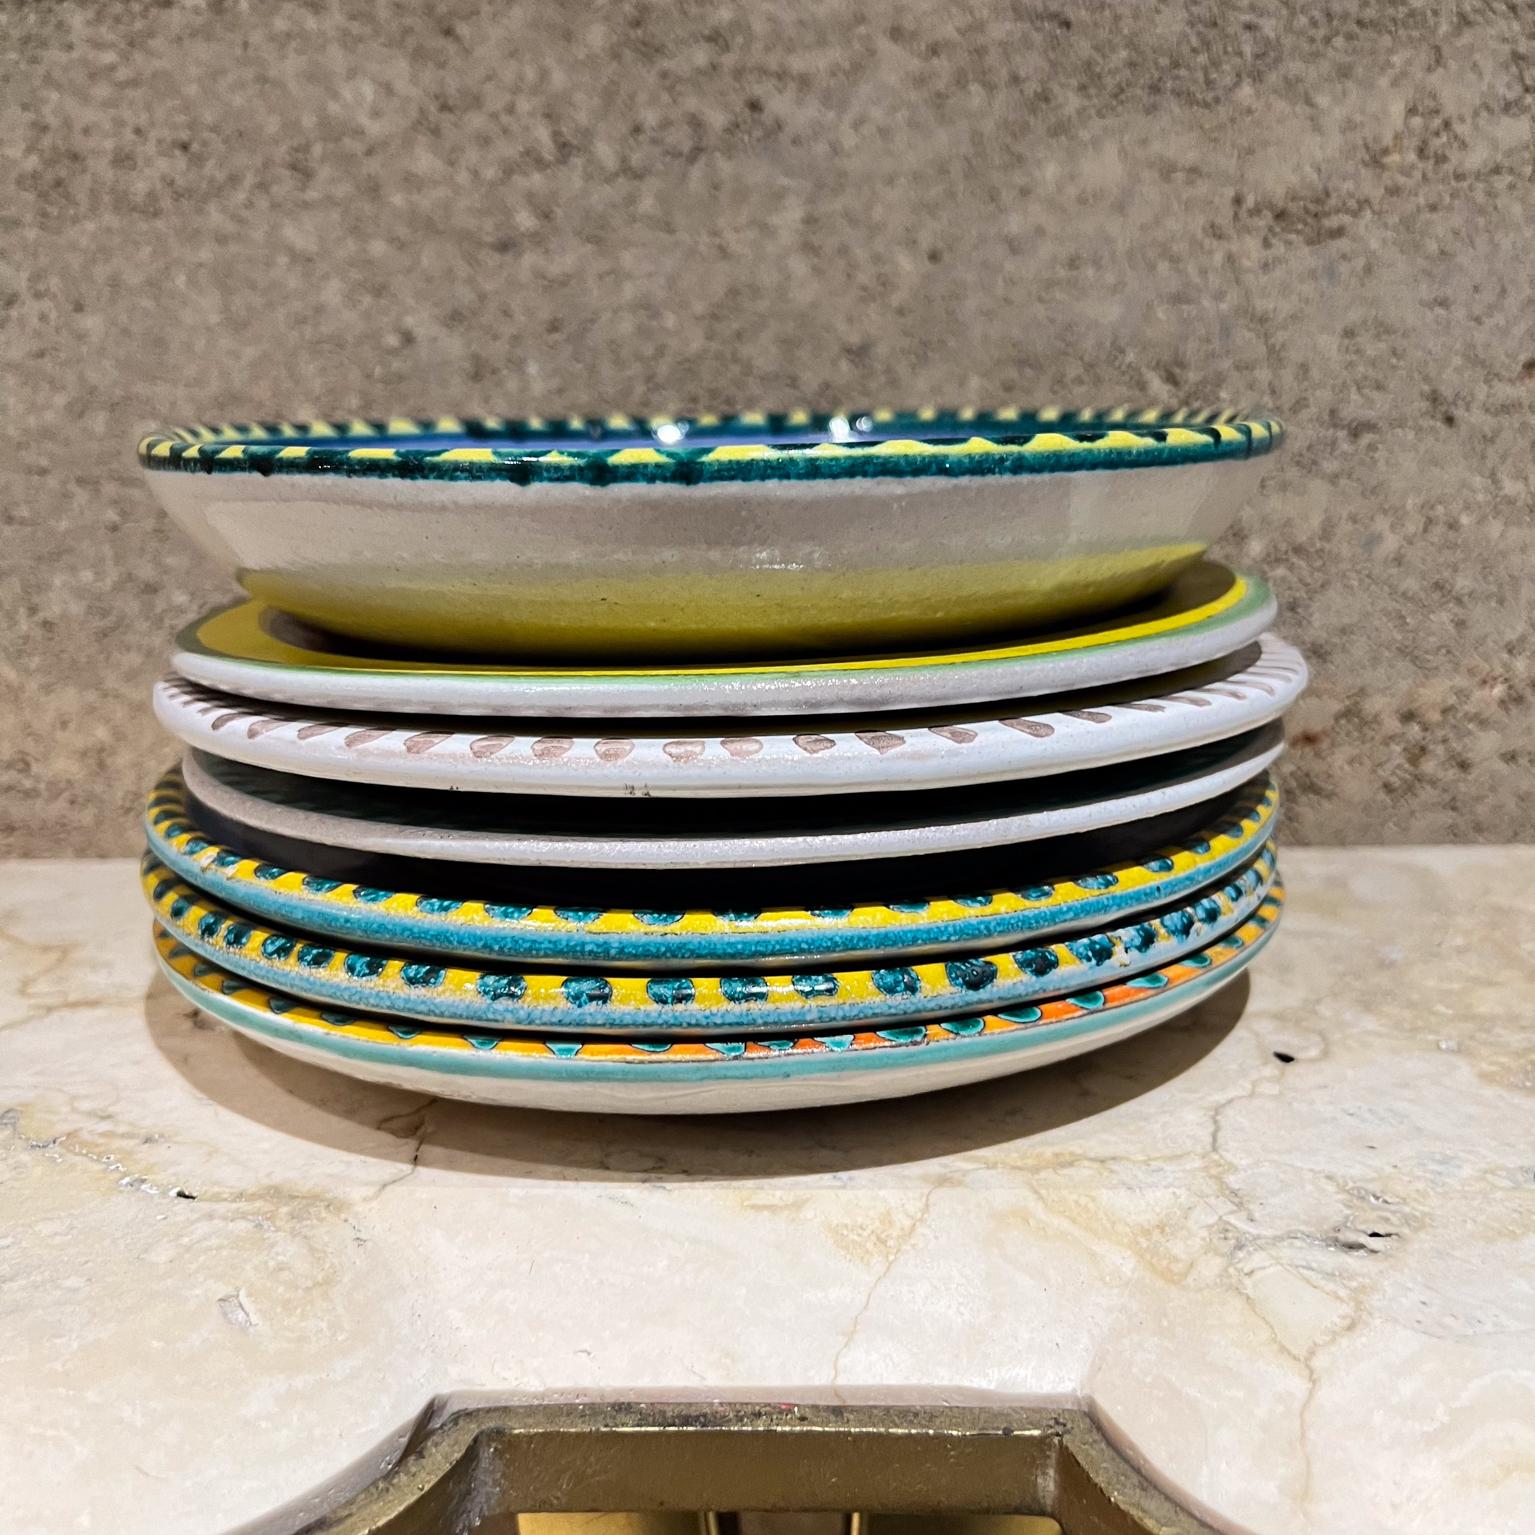 1960s Desimone Art Pottery Set Seven Assorted Plates Italy
Assorted sizes: 2.5 x 8.5 deep plate, blue 1 h x 9 diameter, pair 1 x 8.5 diameter, yellow 1 x 8.75 diameter
Original vintage condition preowned
Review images please